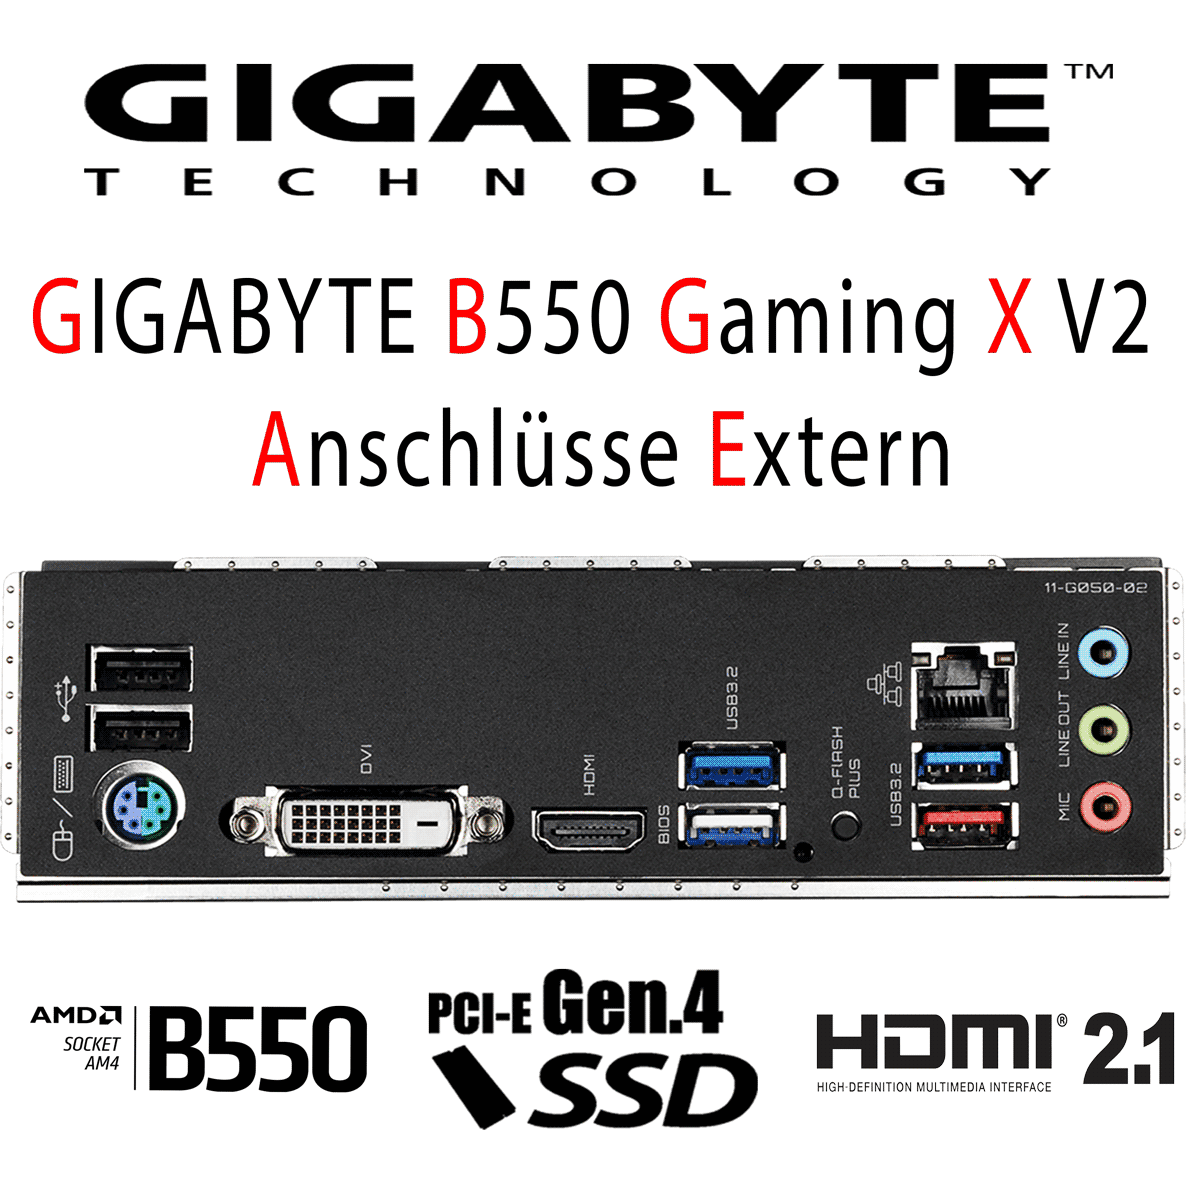 PC Bundle • AMD Ryzen 9 5900X • GIGABYTE B550 Gaming X V2 • 16GB DDR4-3200 Ram